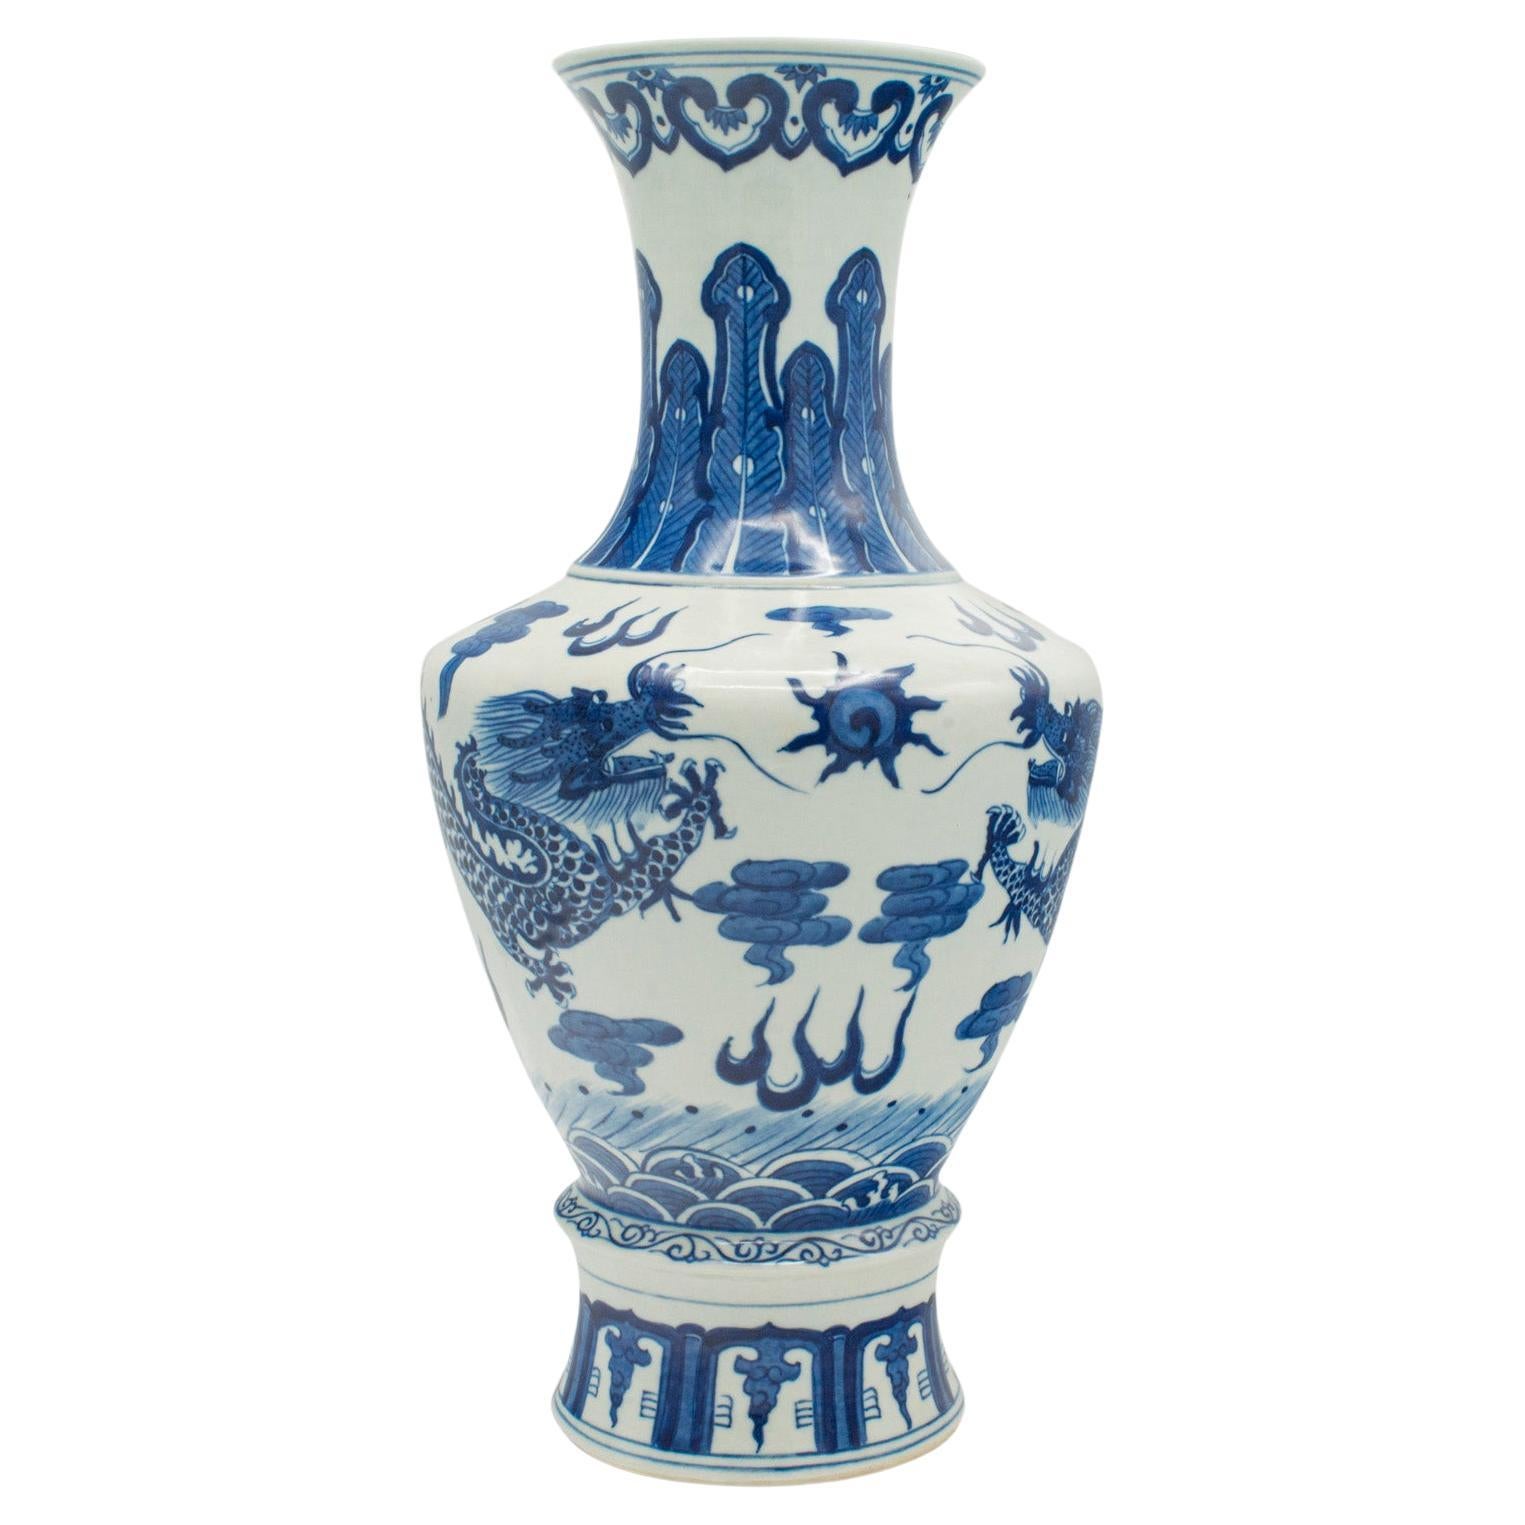 Large Vintage White and Blue Vase, Chinese, Ceramic, Decor, Flower Baluster For Sale